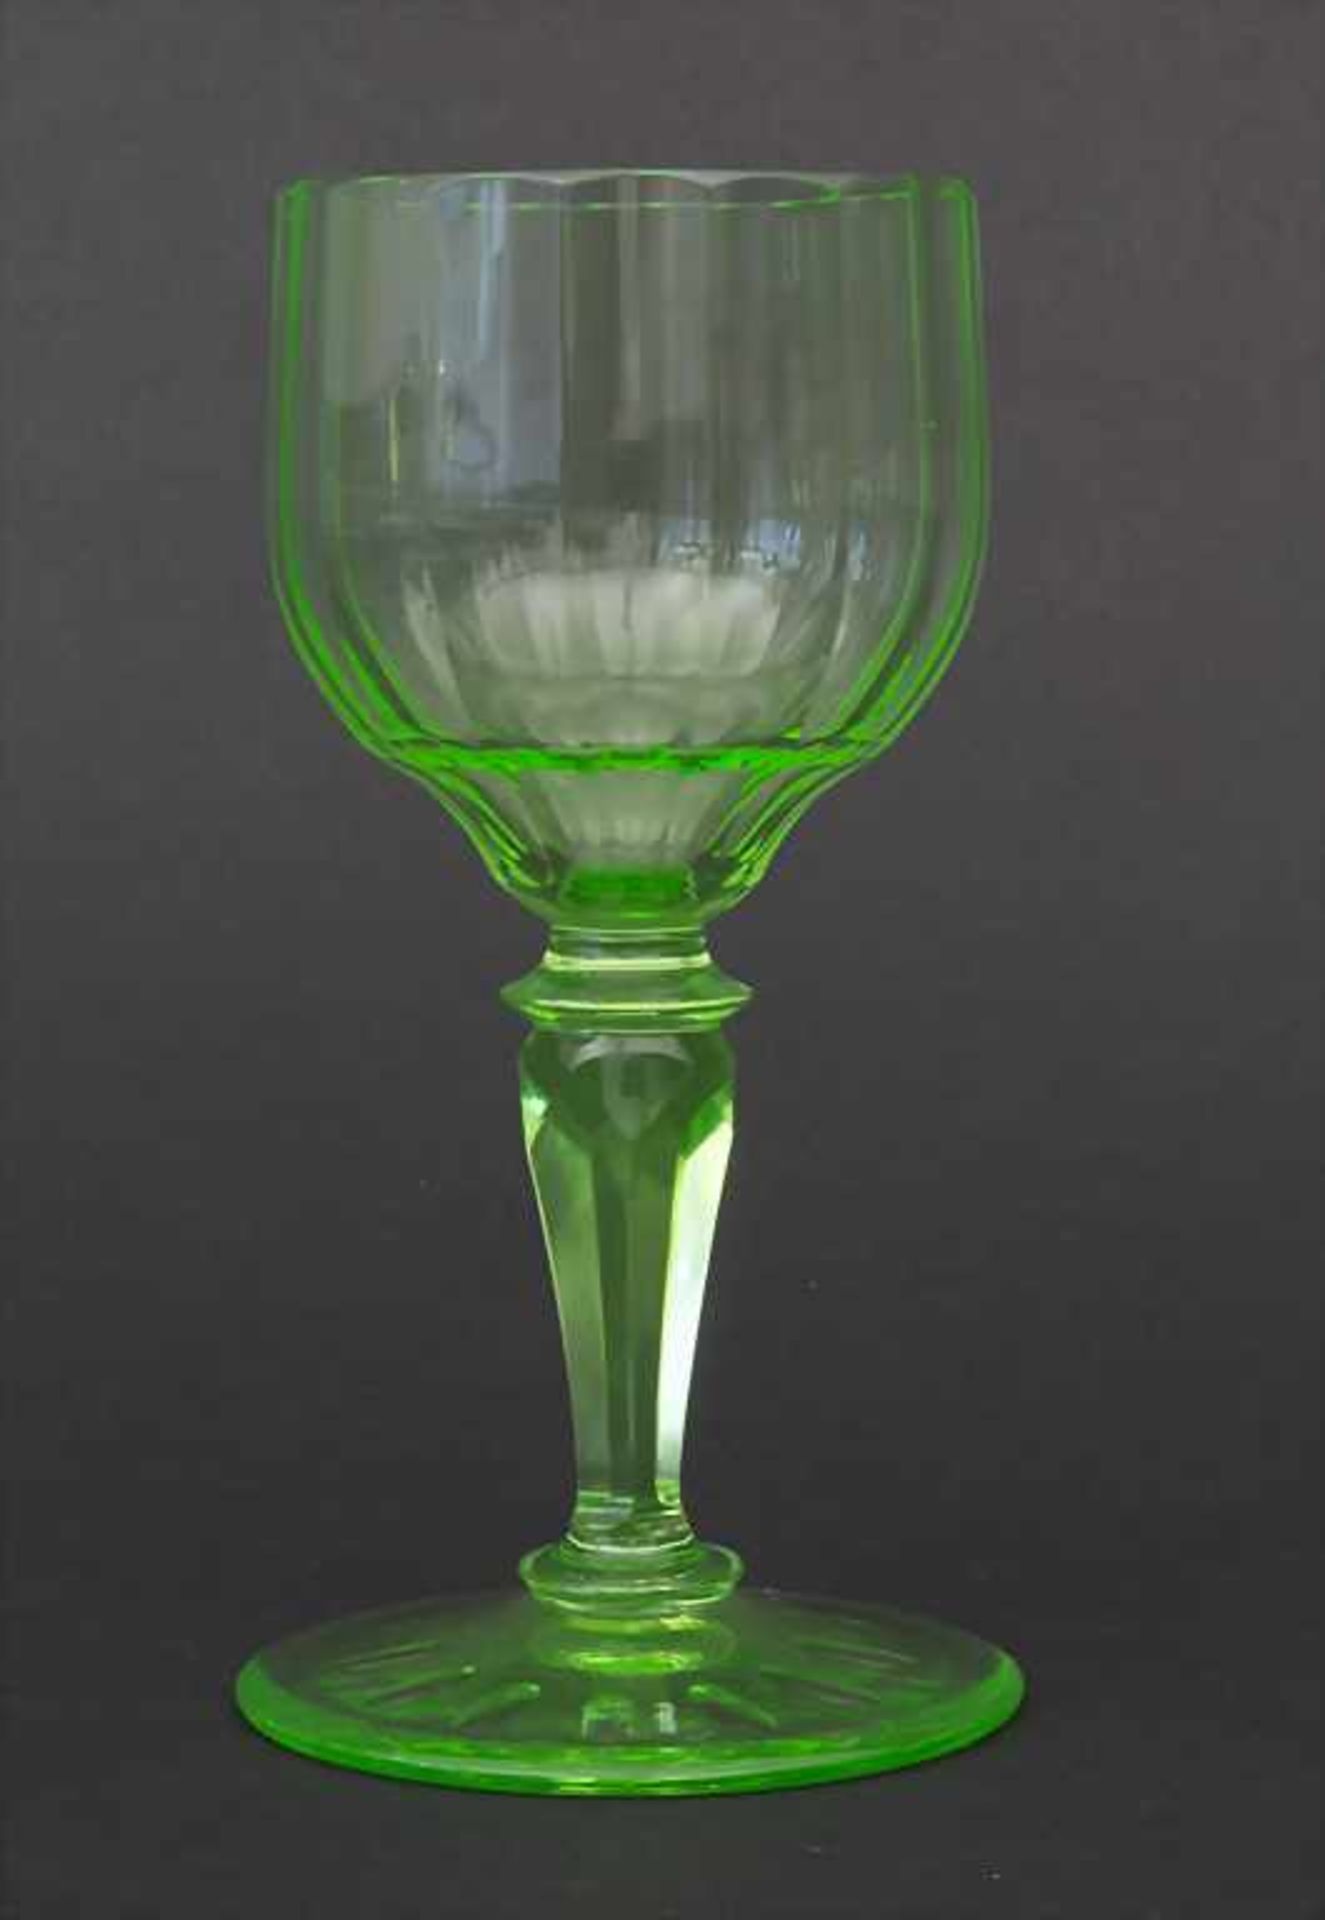 5 Urangläser / 5 uranium glasses, J. & L. Lobmeyr, Wien, um 1900 - Image 2 of 4